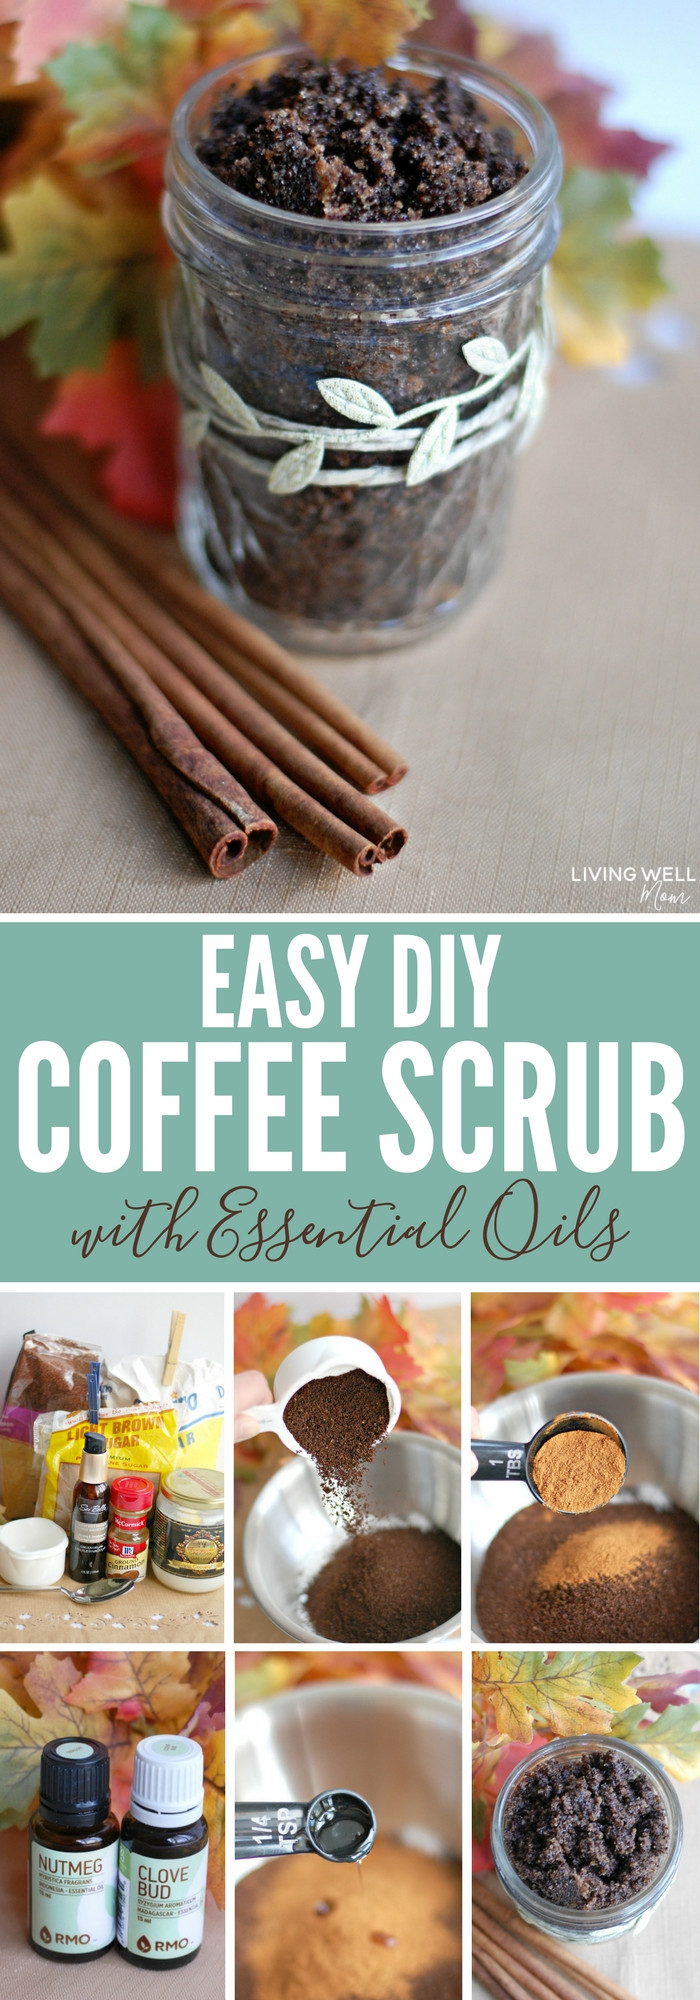 Best ideas about Coffee Scrub DIY
. Save or Pin Easy DIY Coffee Scrub with Essential Oils Now.